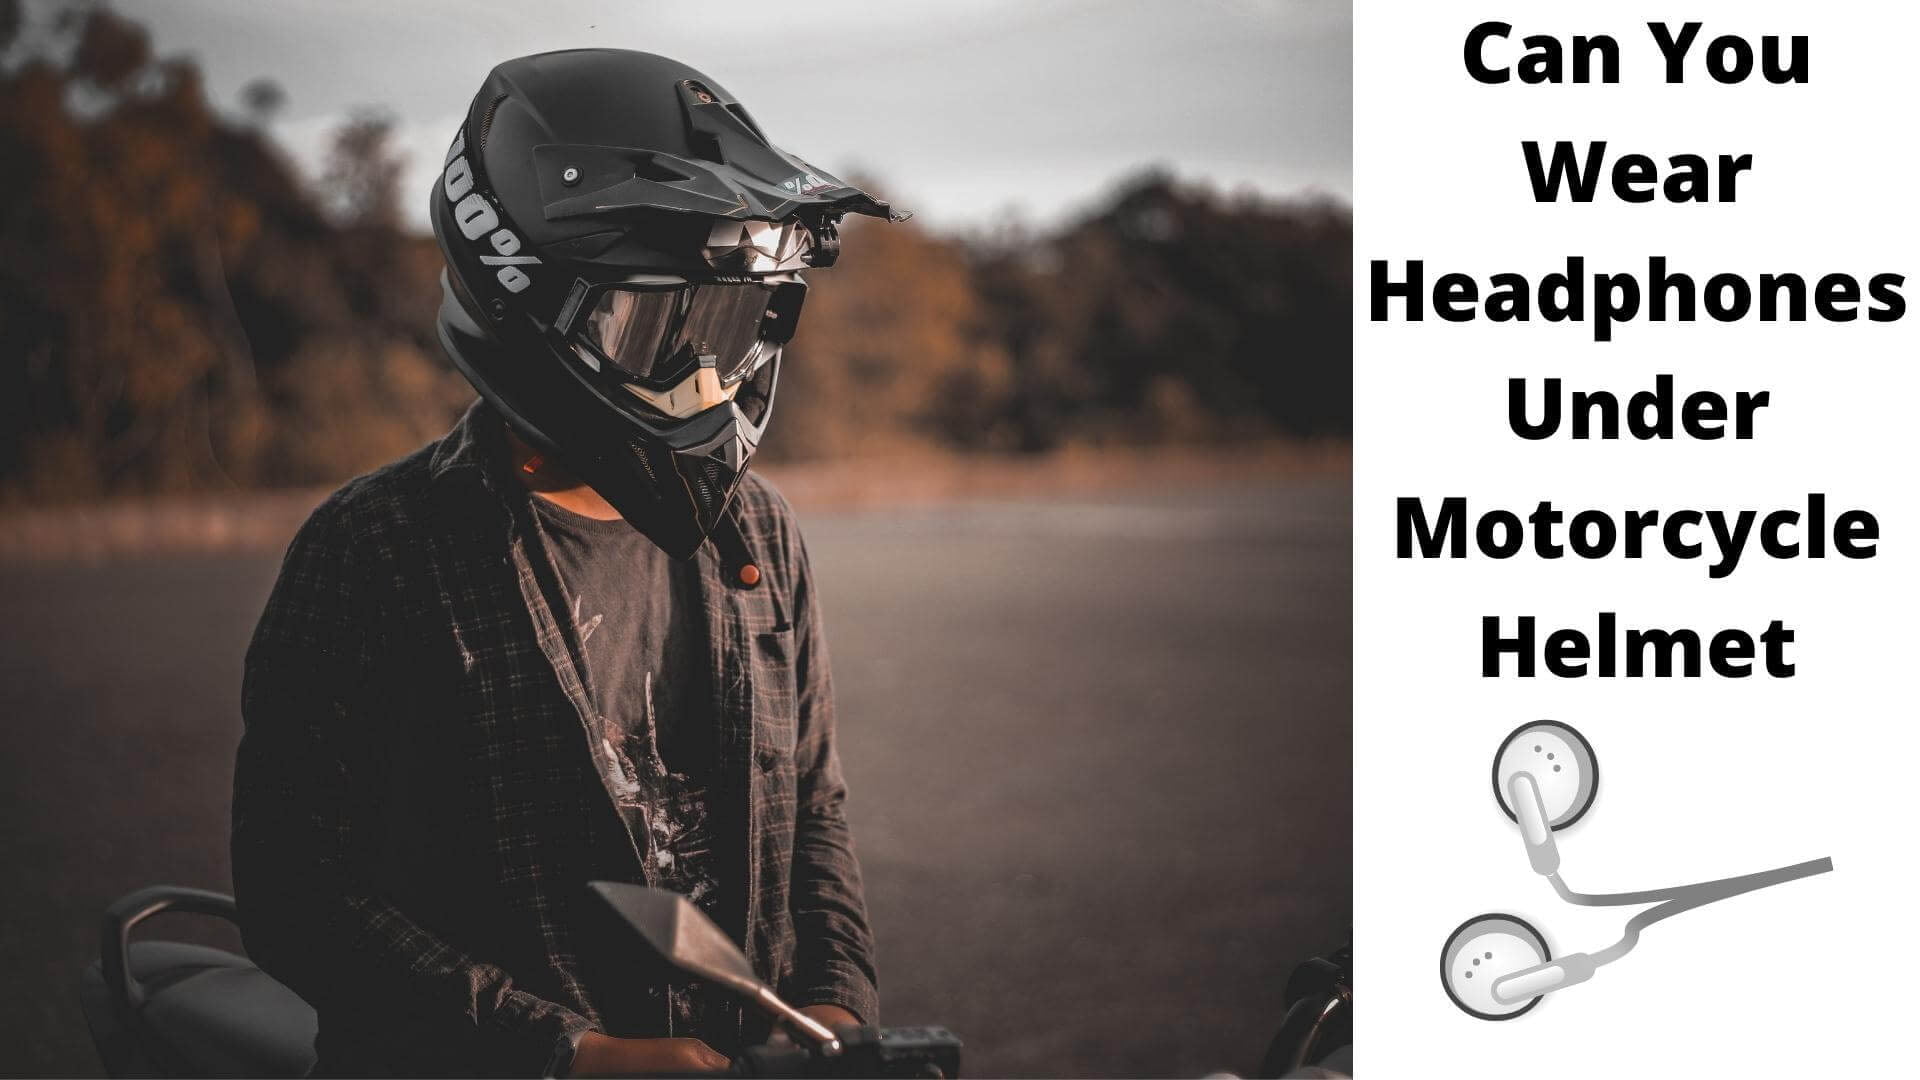 Can You Wear Headphones Under Motorcycle Helmet